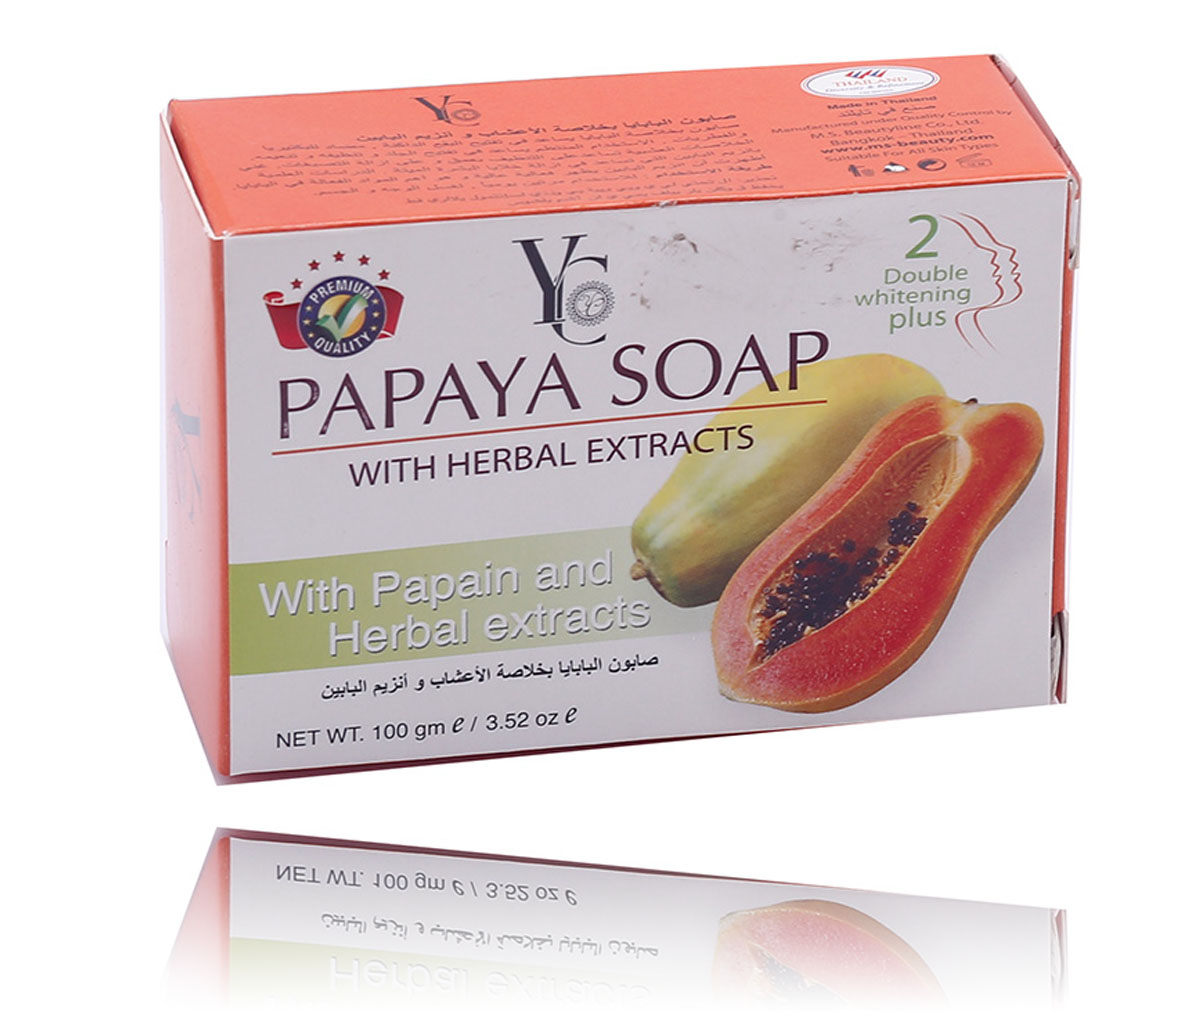 YC PAPAYA DOUBLE WHT PLUS SOAP 100GM